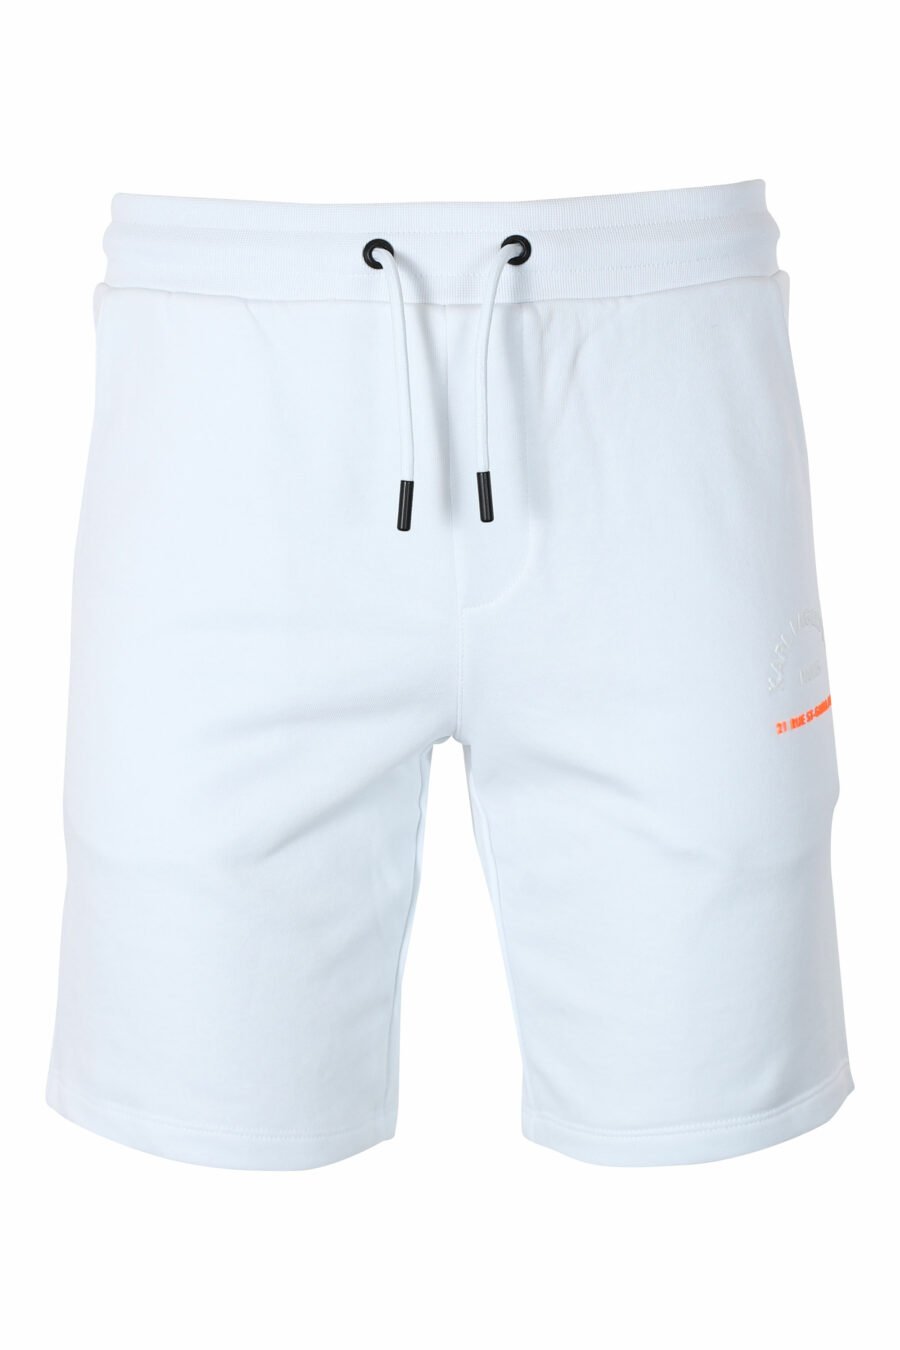 Pantalón de chándal blanco corto con minilogo "rue st guillaume" naranja - IMG 9559